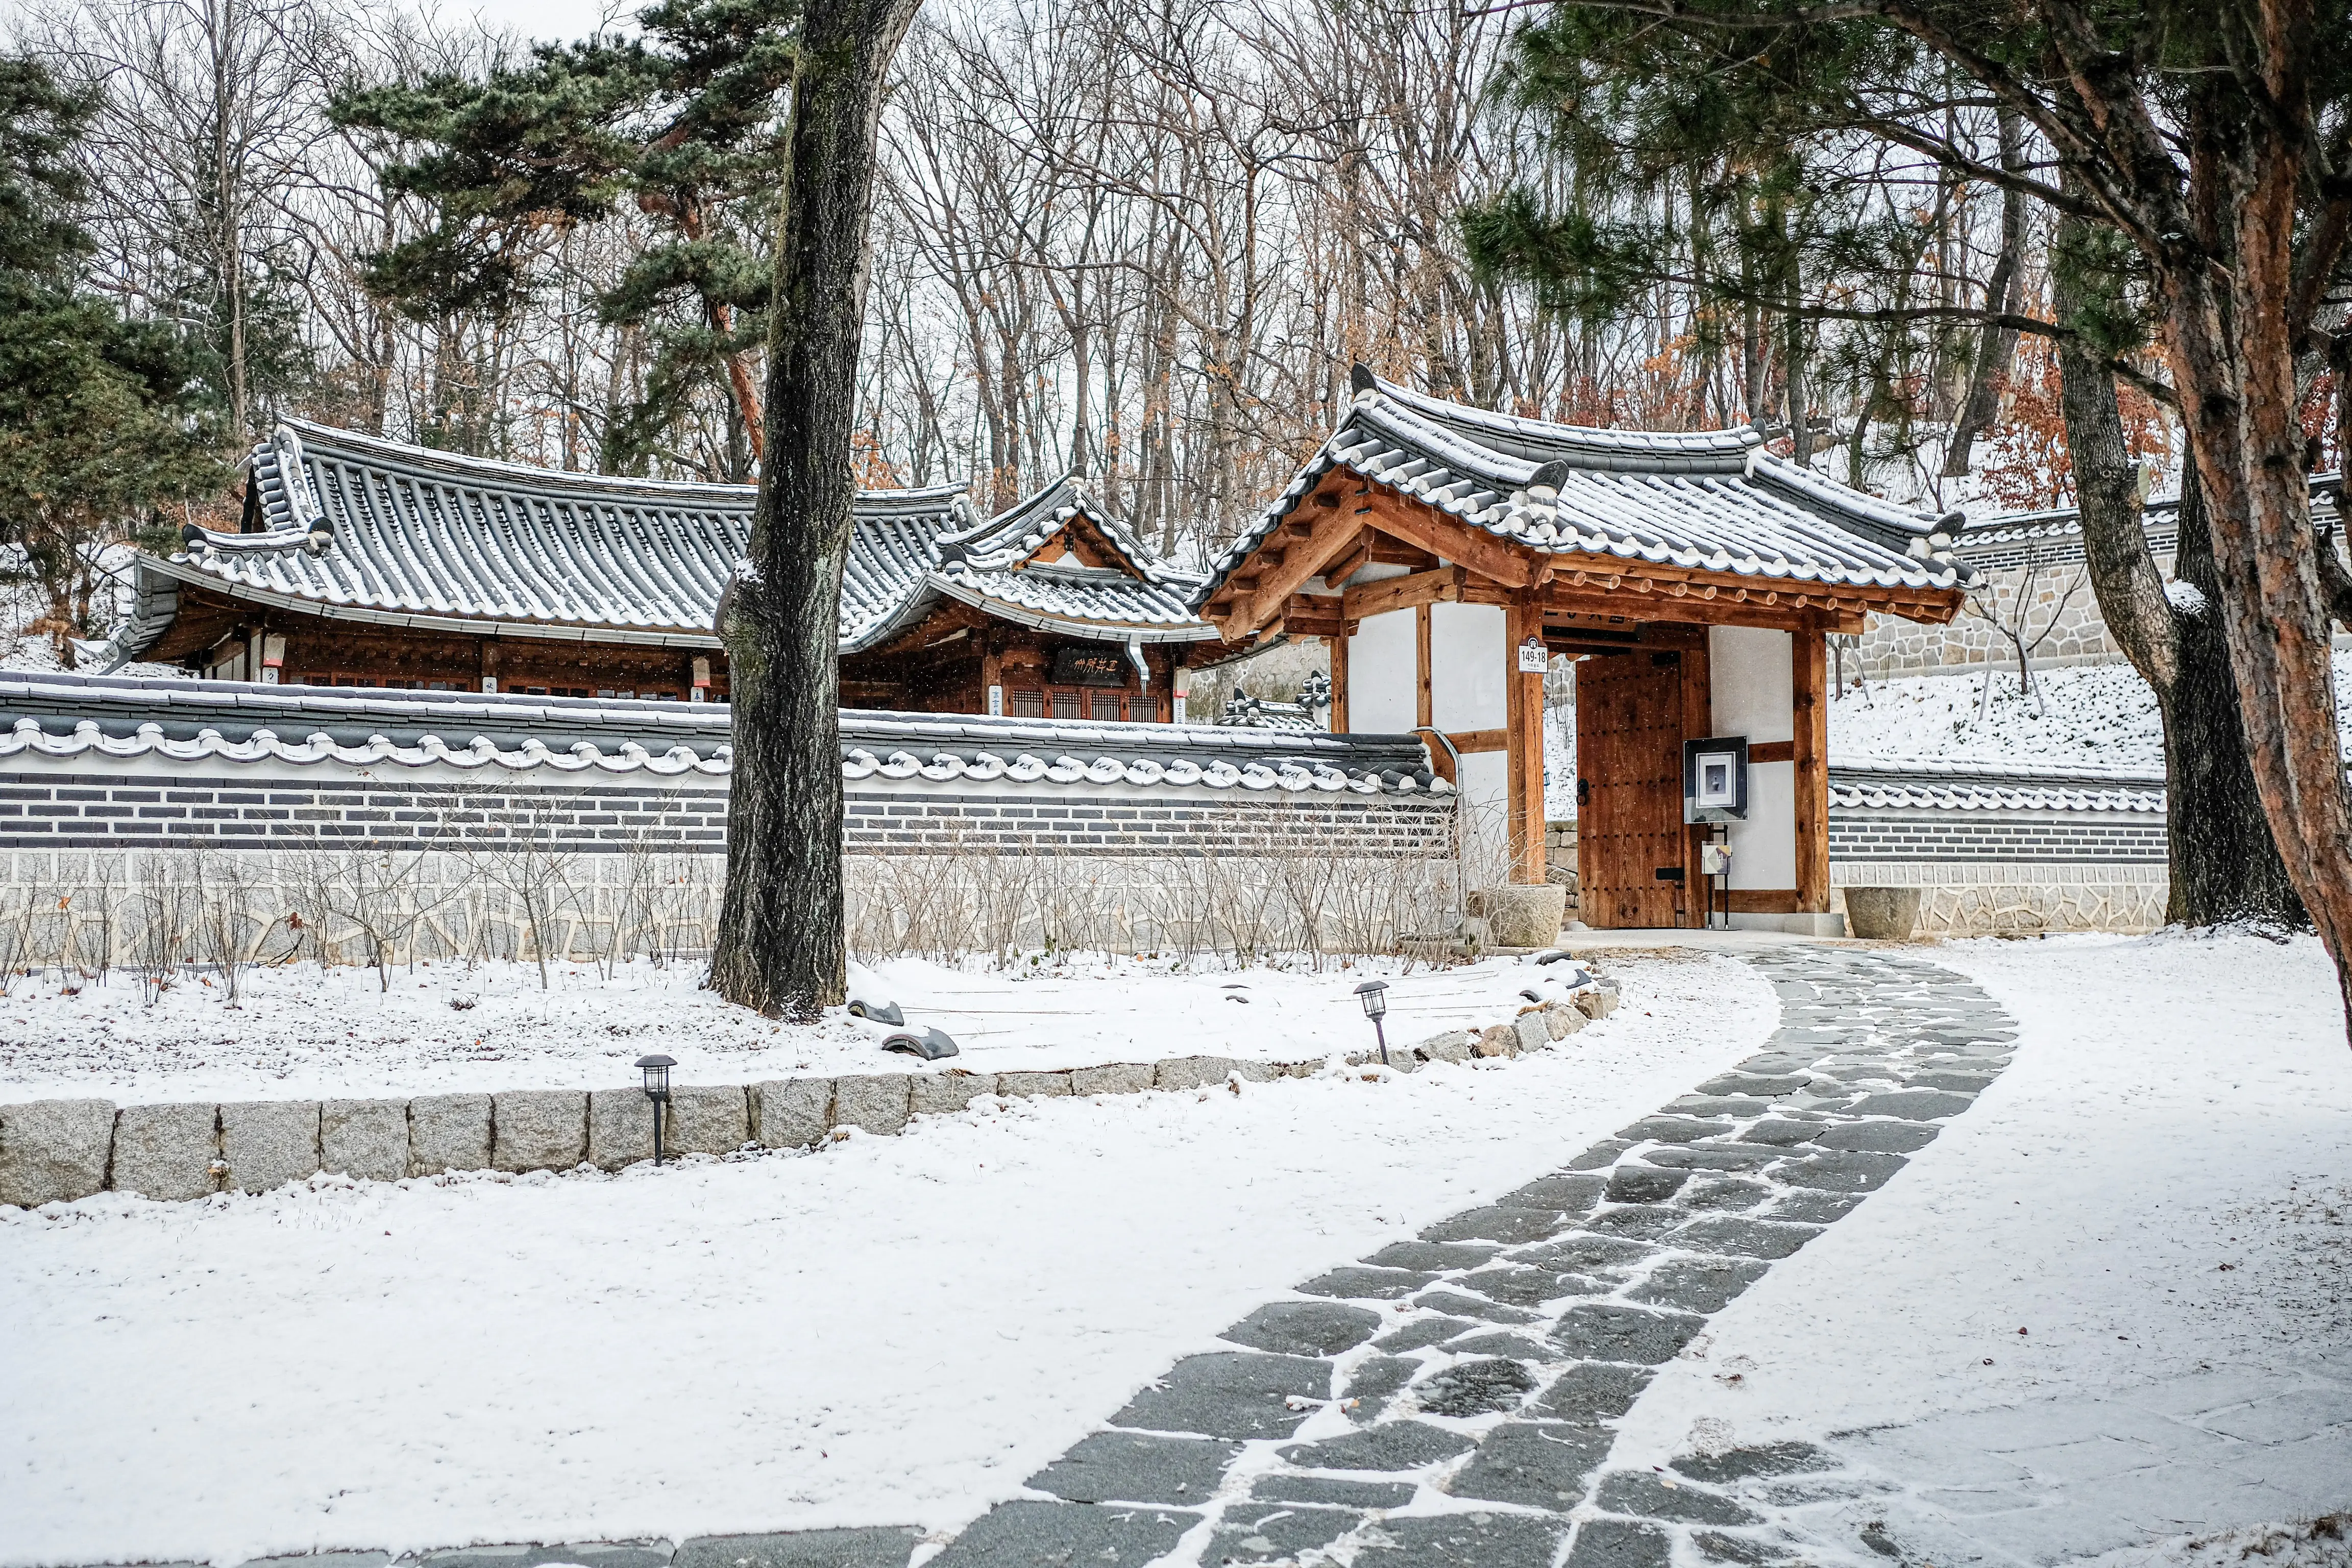 Winter in Seoul, South Korea